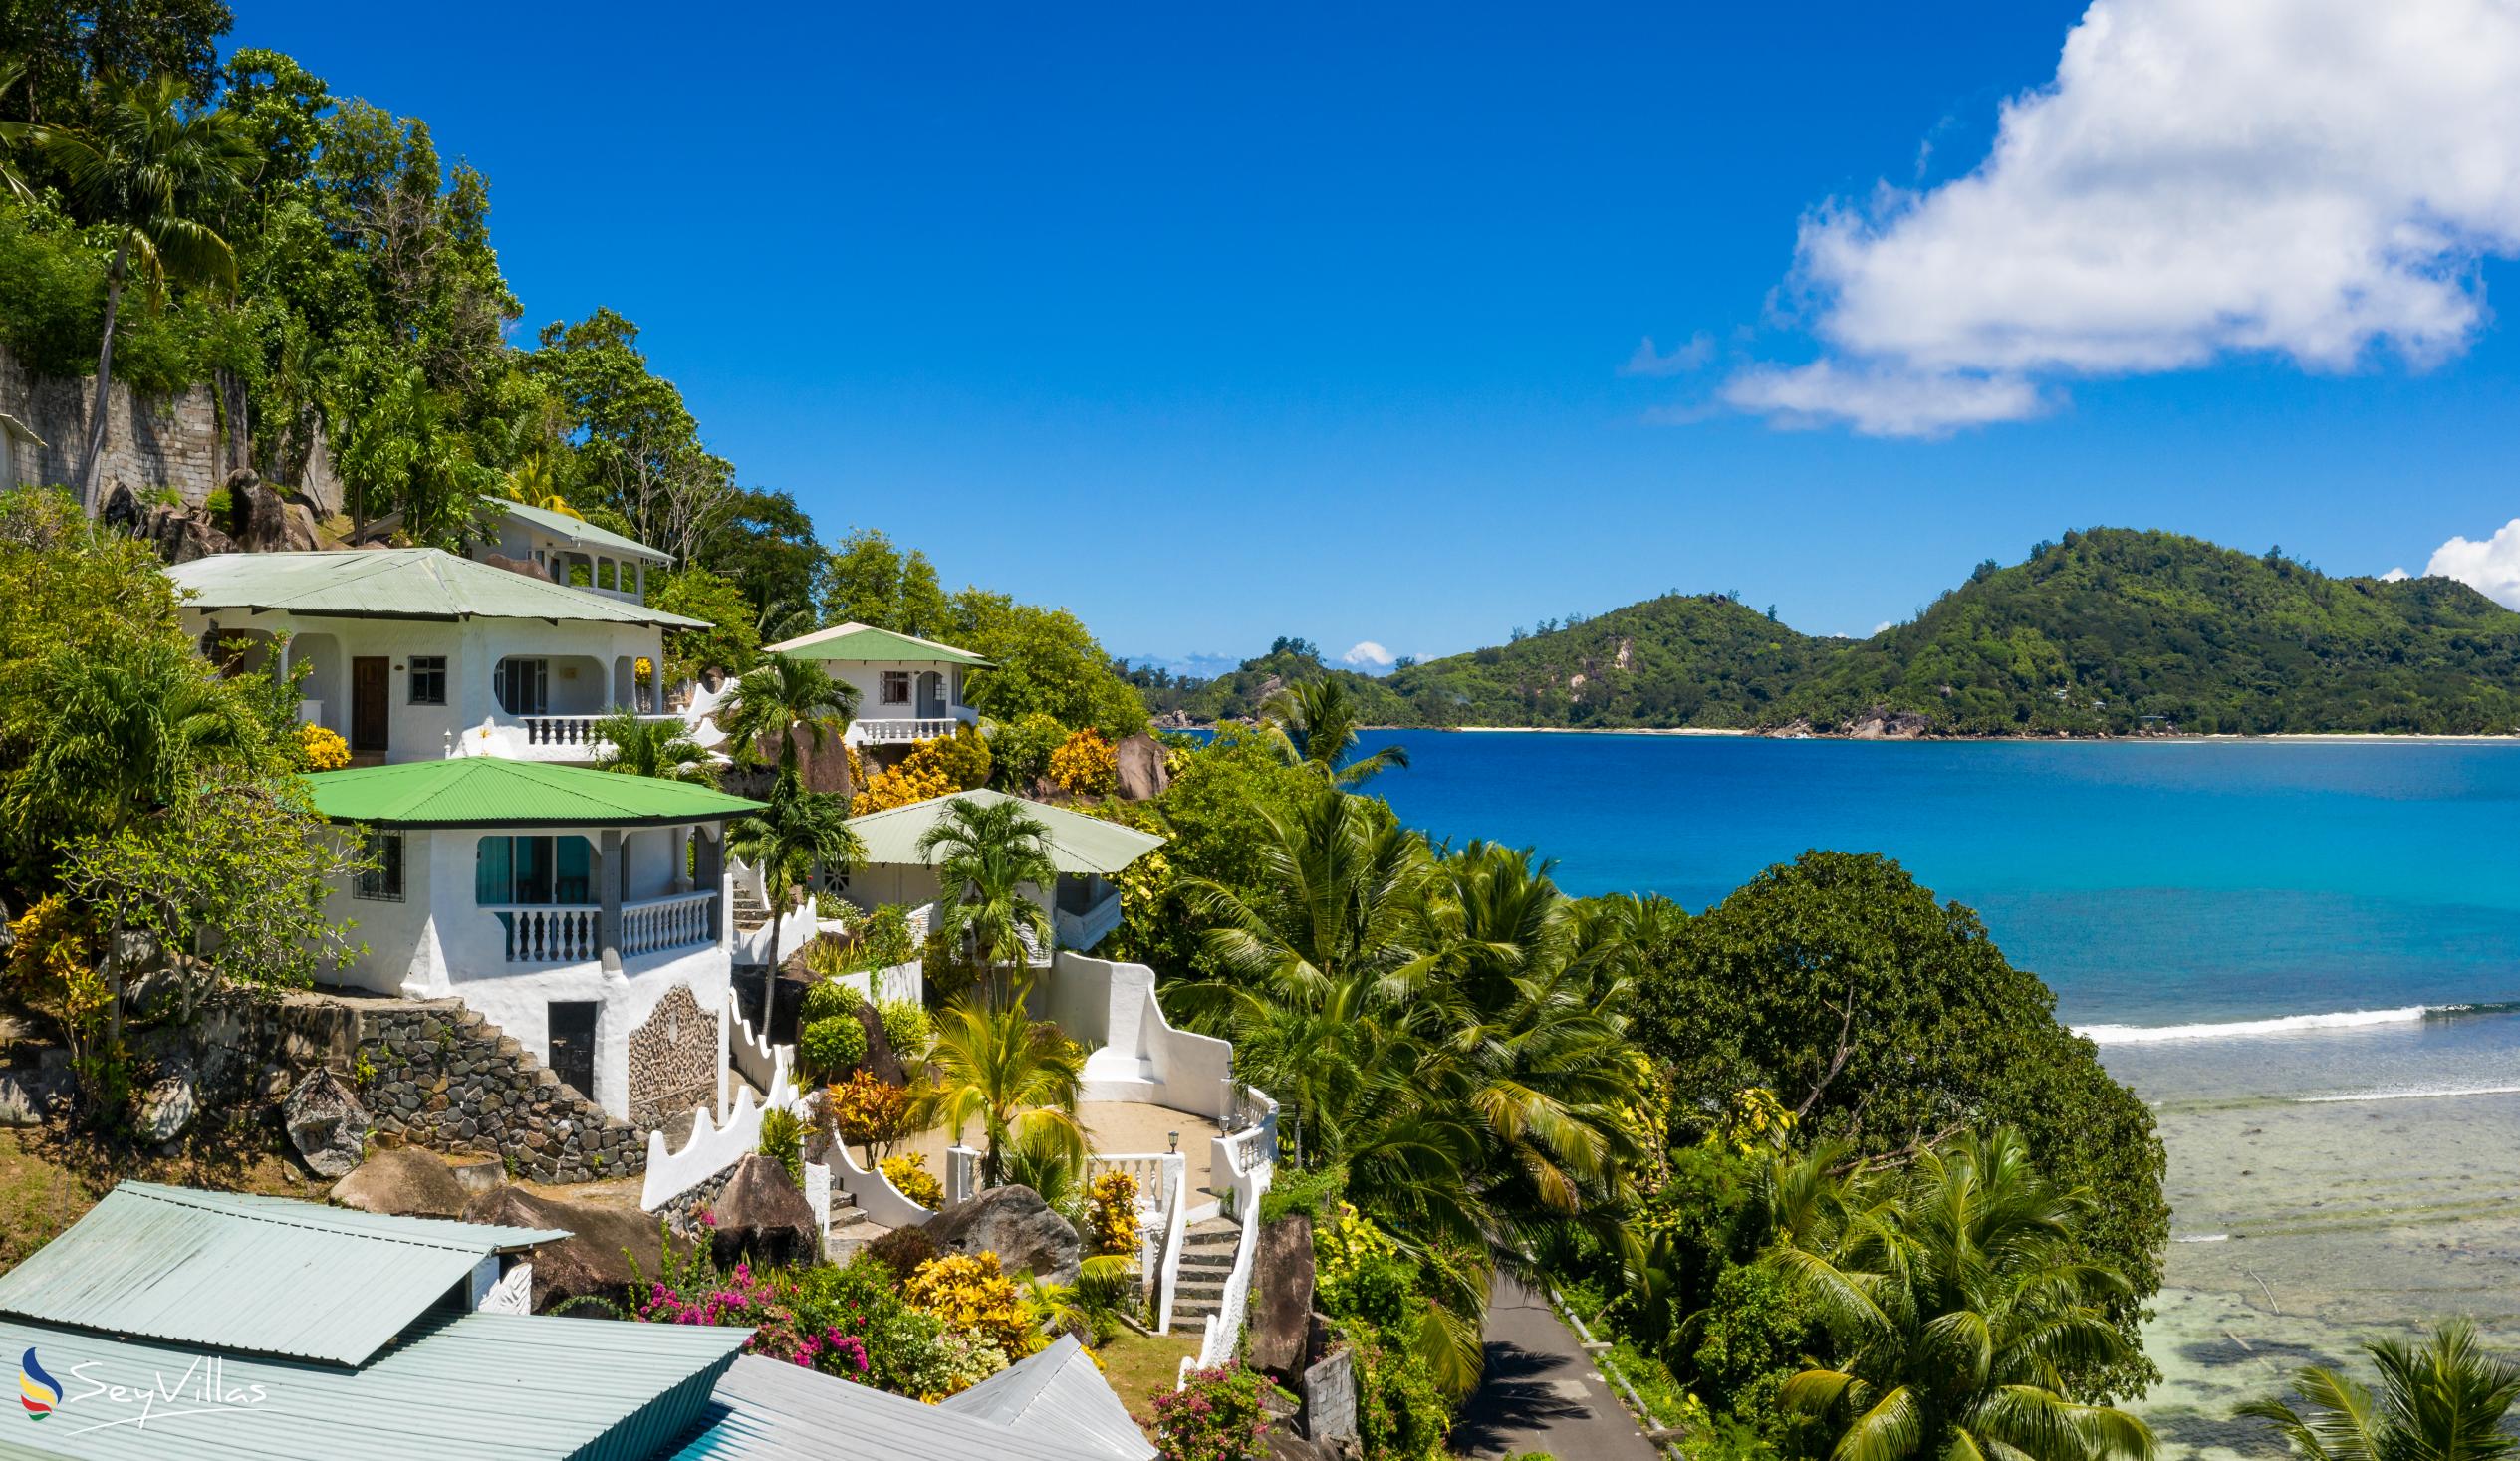 Photo 8: Lazare Picault Hotel - Outdoor area - Mahé (Seychelles)